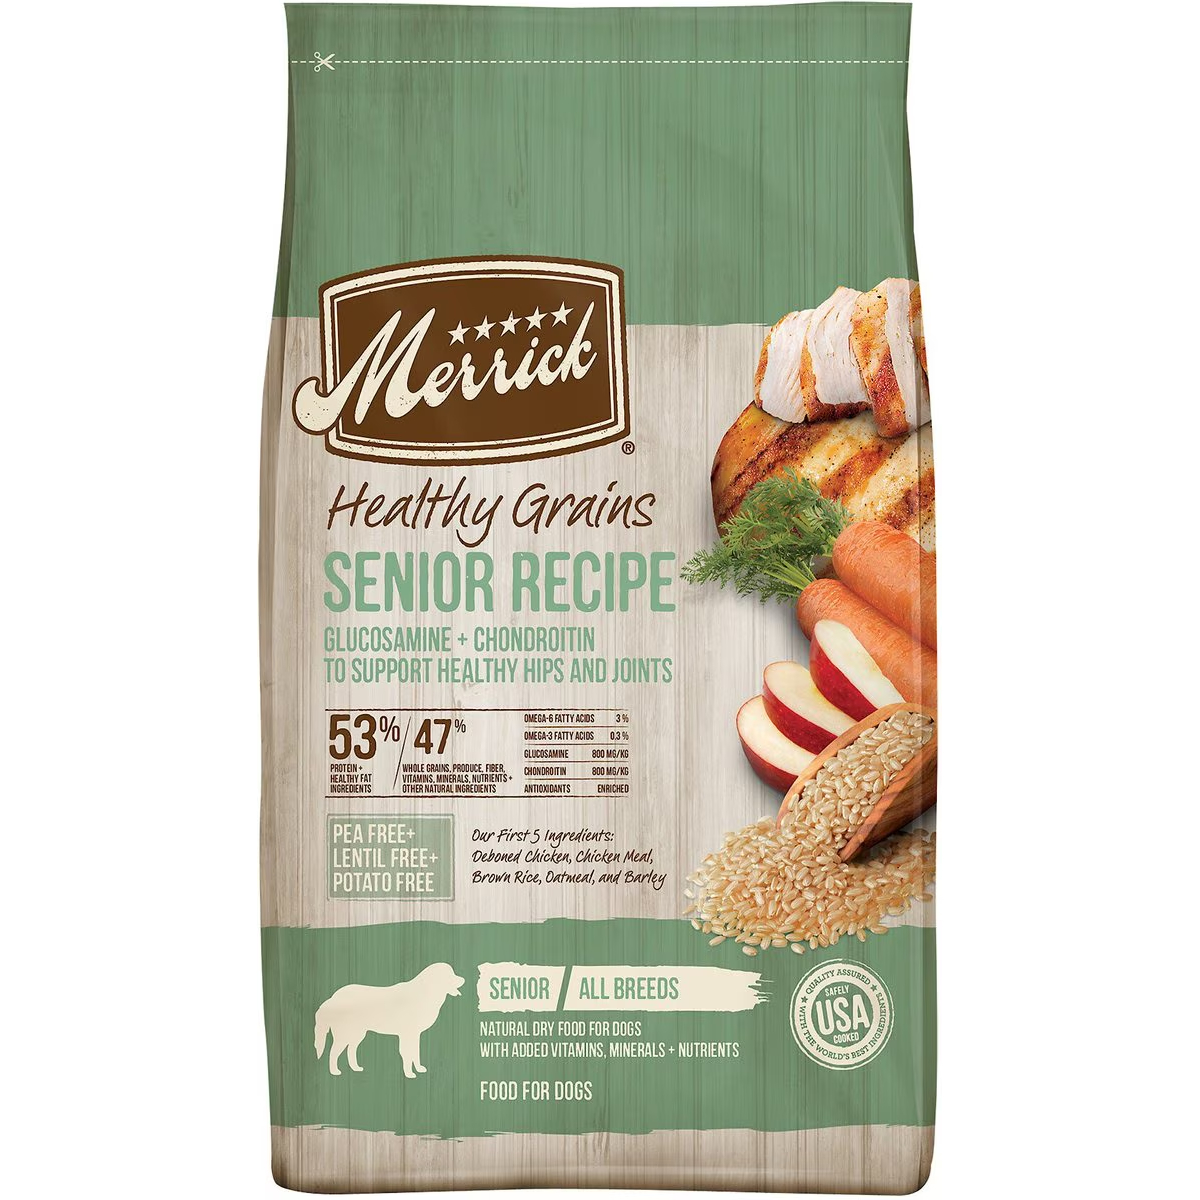 Merrick Healthy Grains Senior Recipe Dog Food